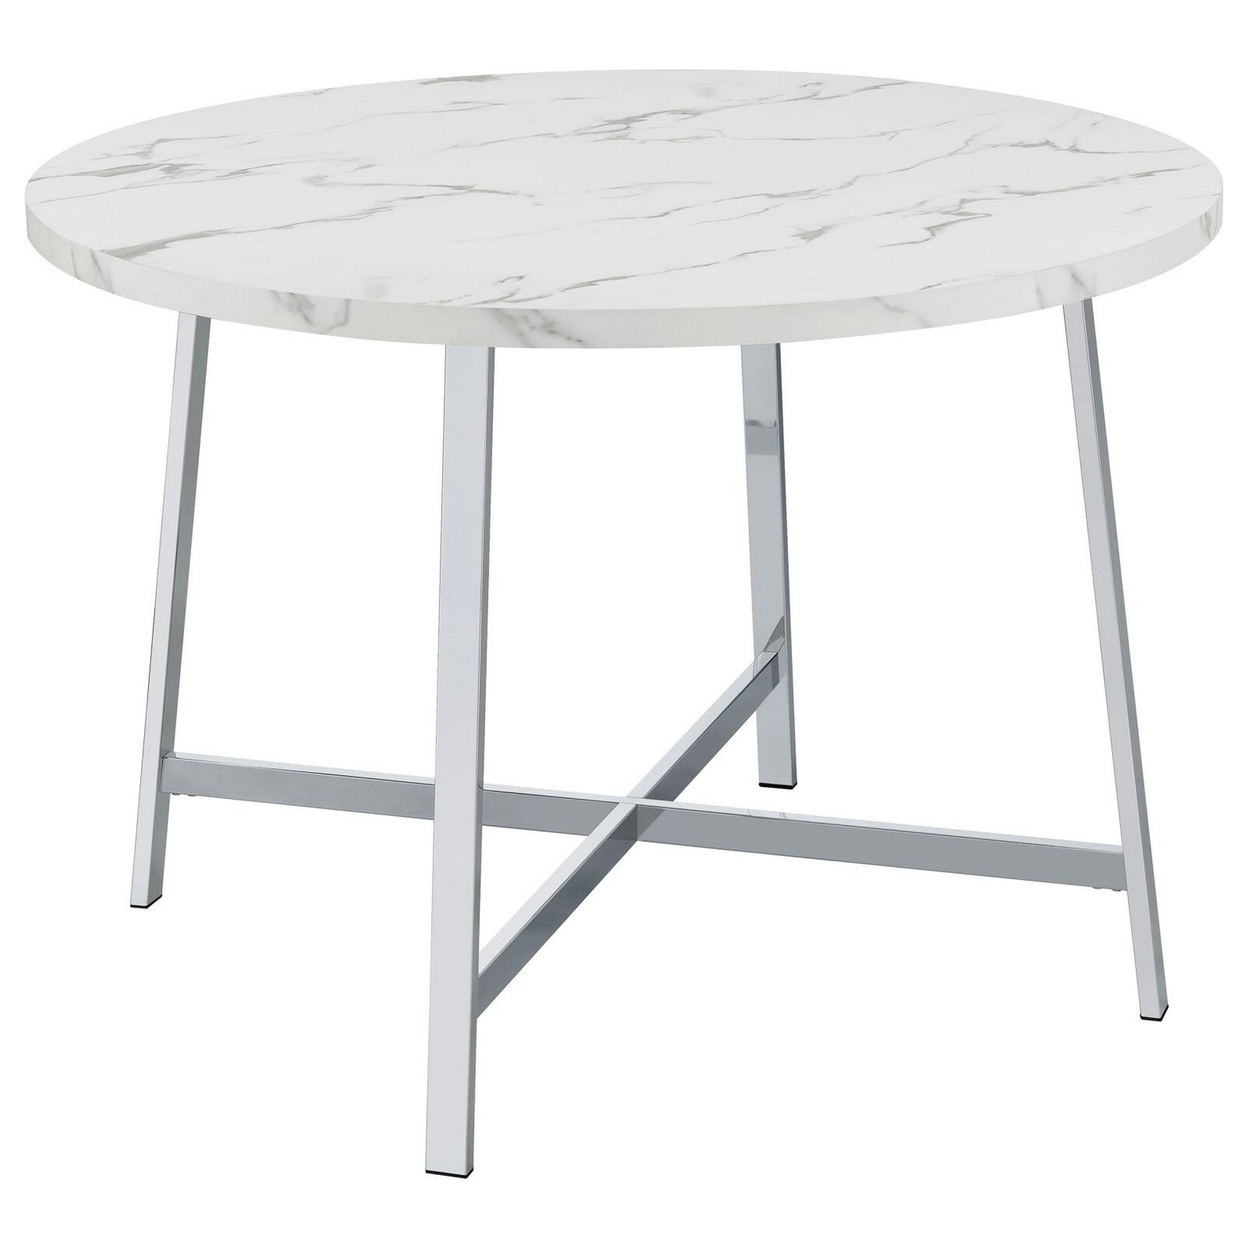 45 Inch Dining Table, Faux Carrara Round Marble Top, Chrome Metal Legs -Saltoro Sherpi